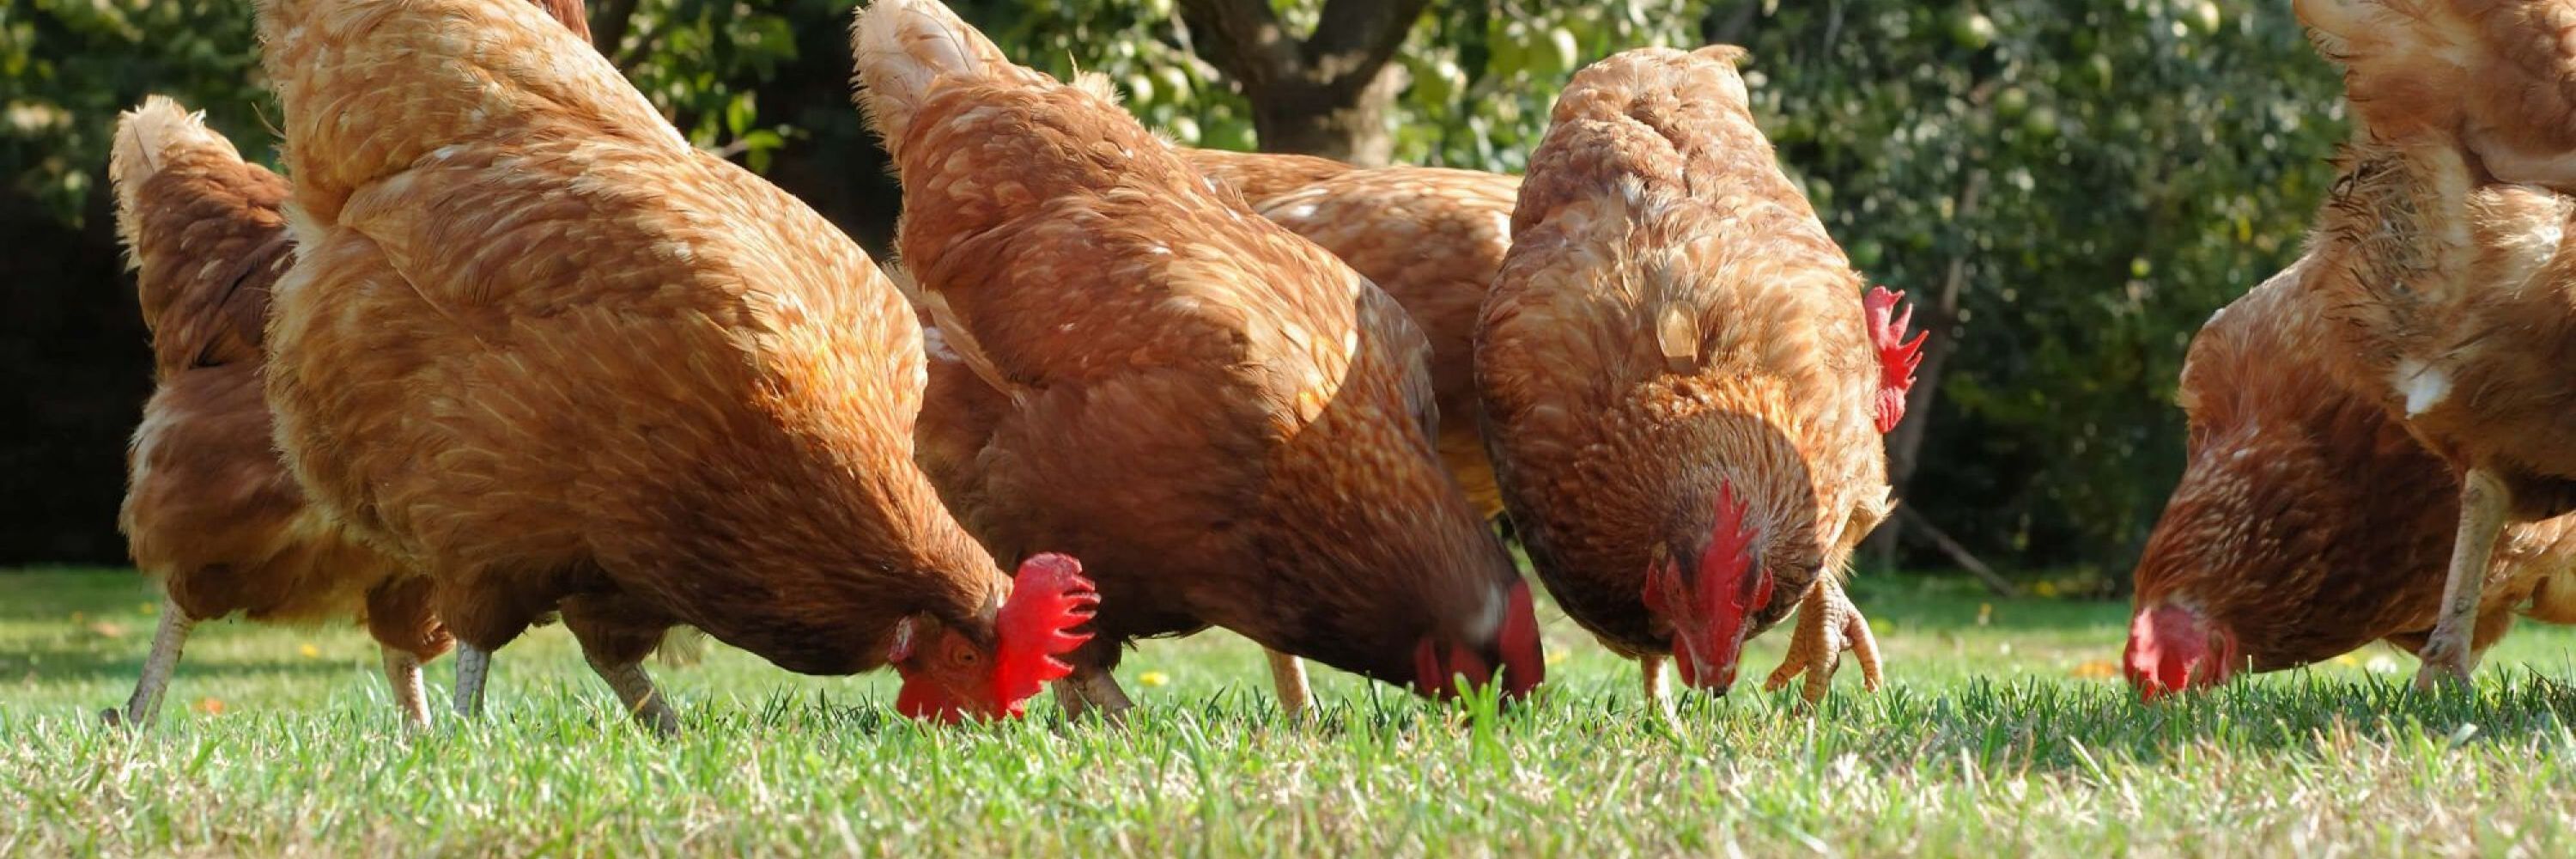 Hühner / Chickens